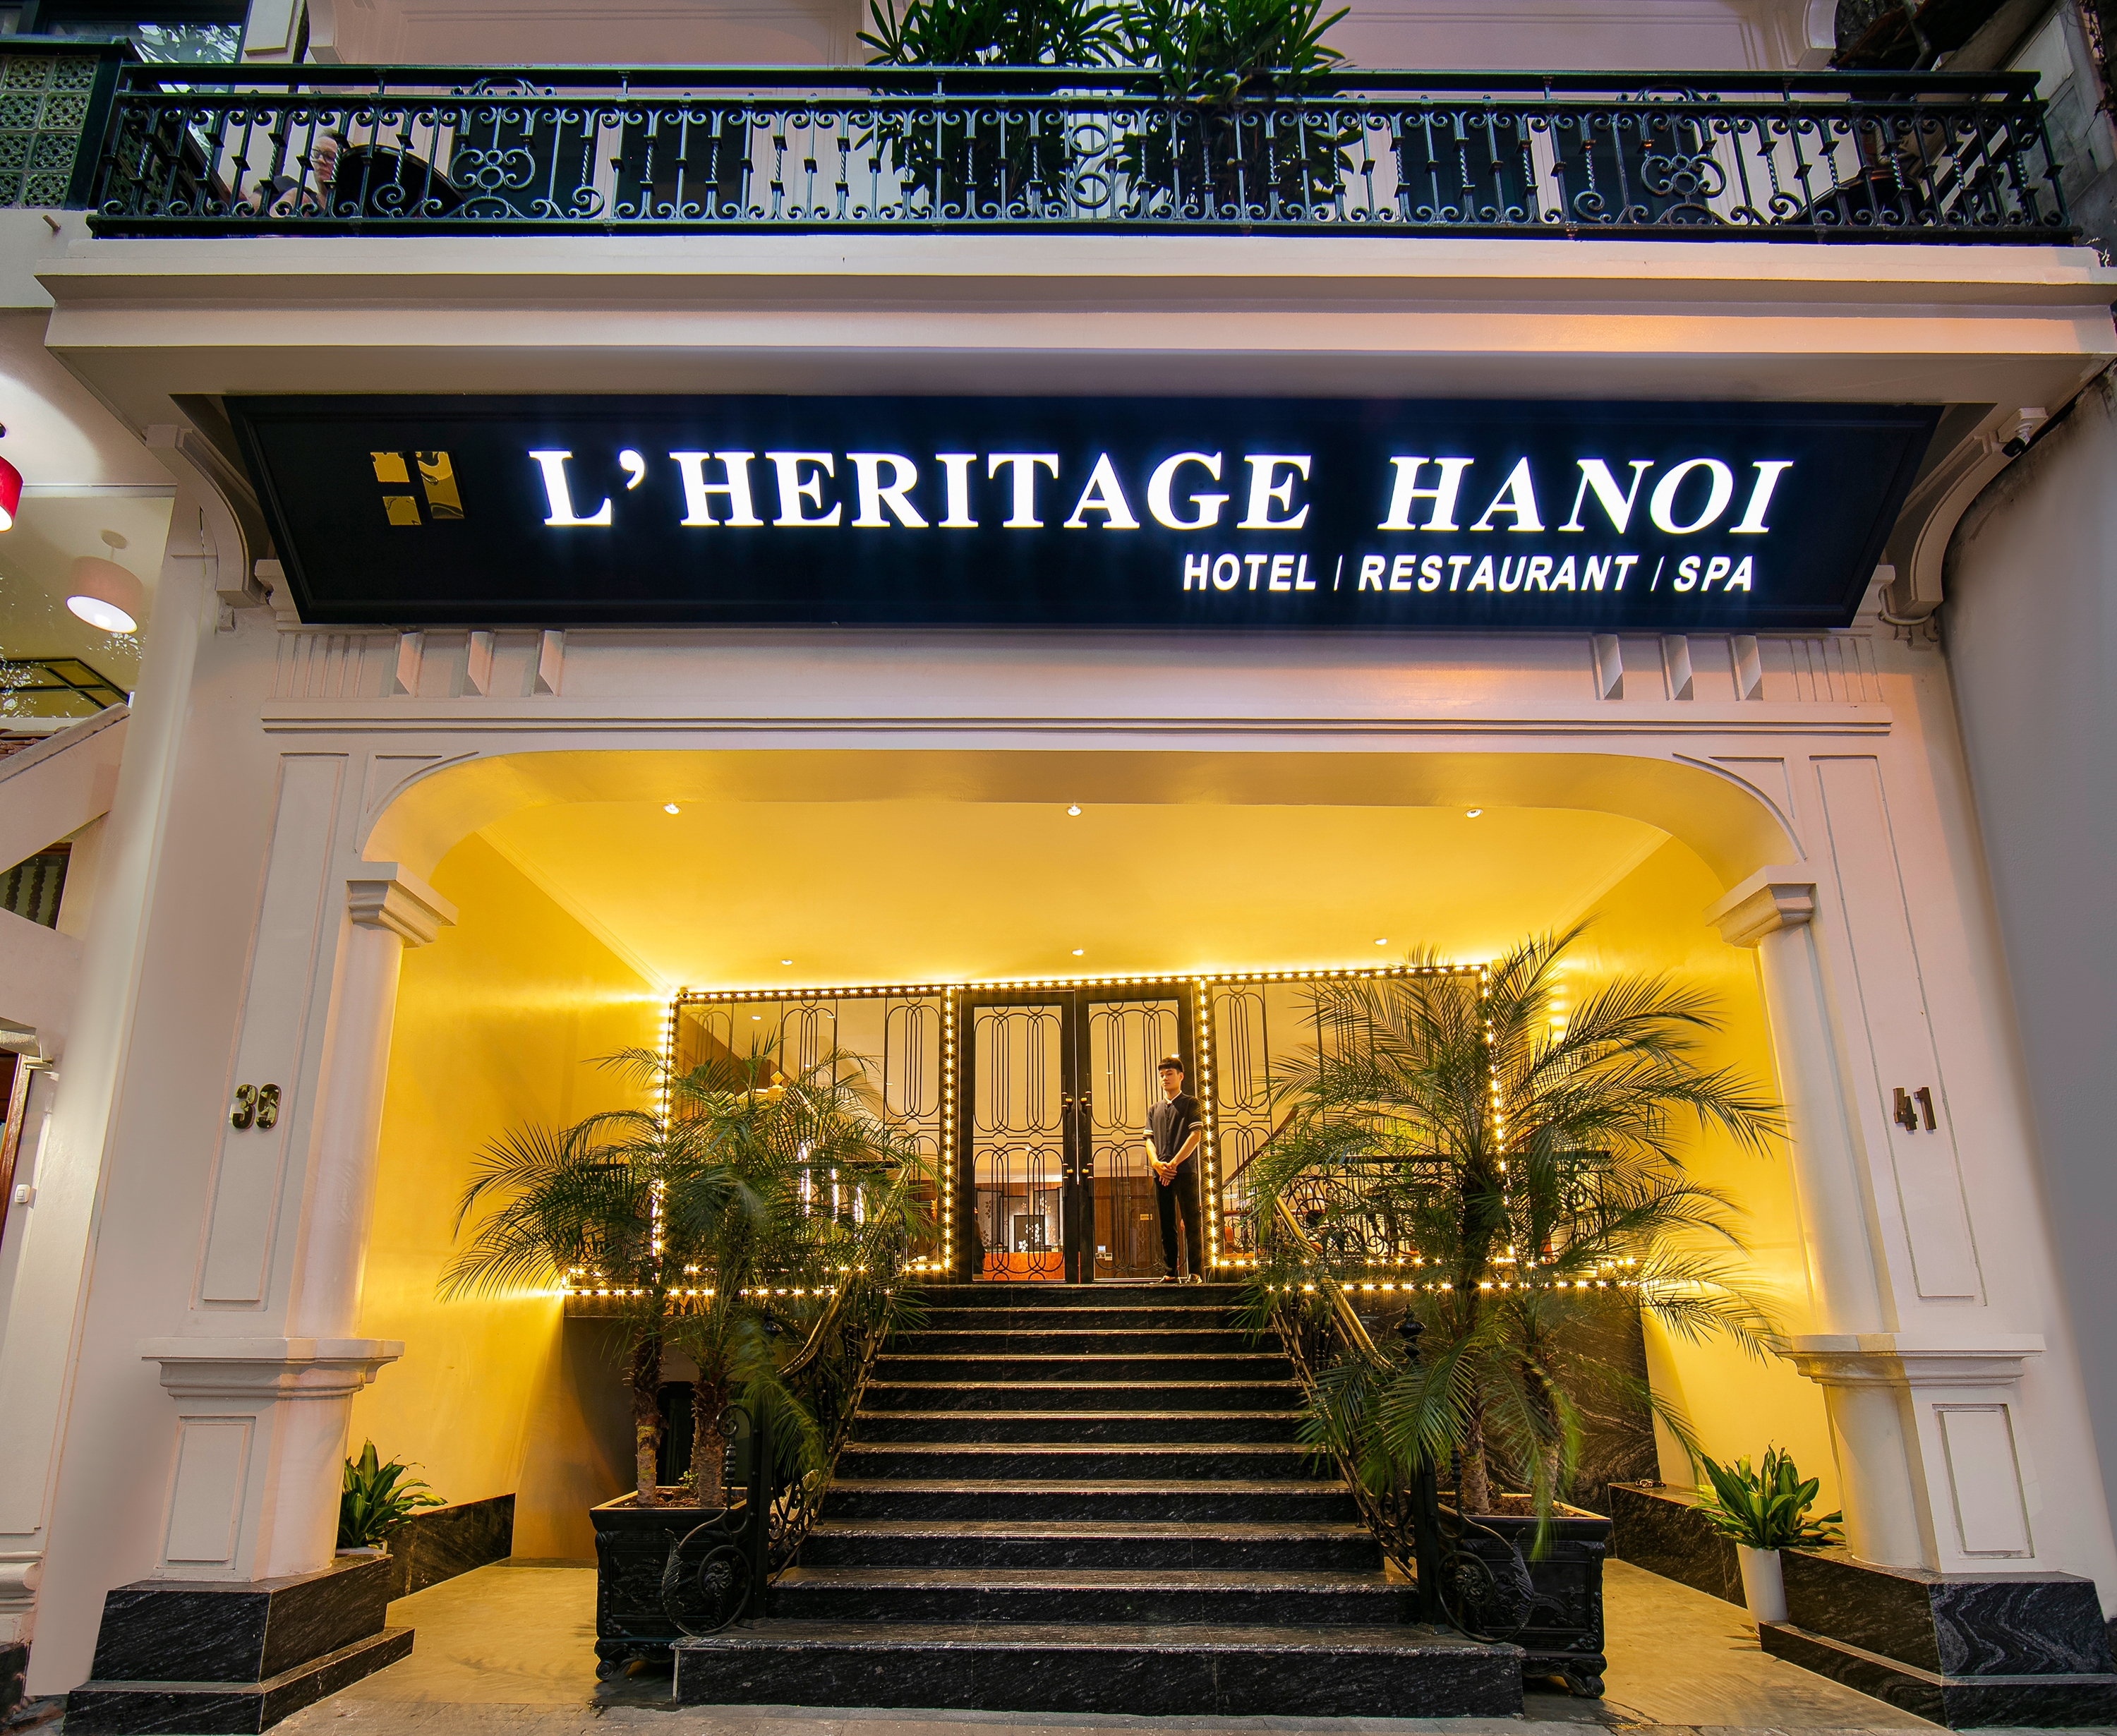 Hotel L 'Heritage image